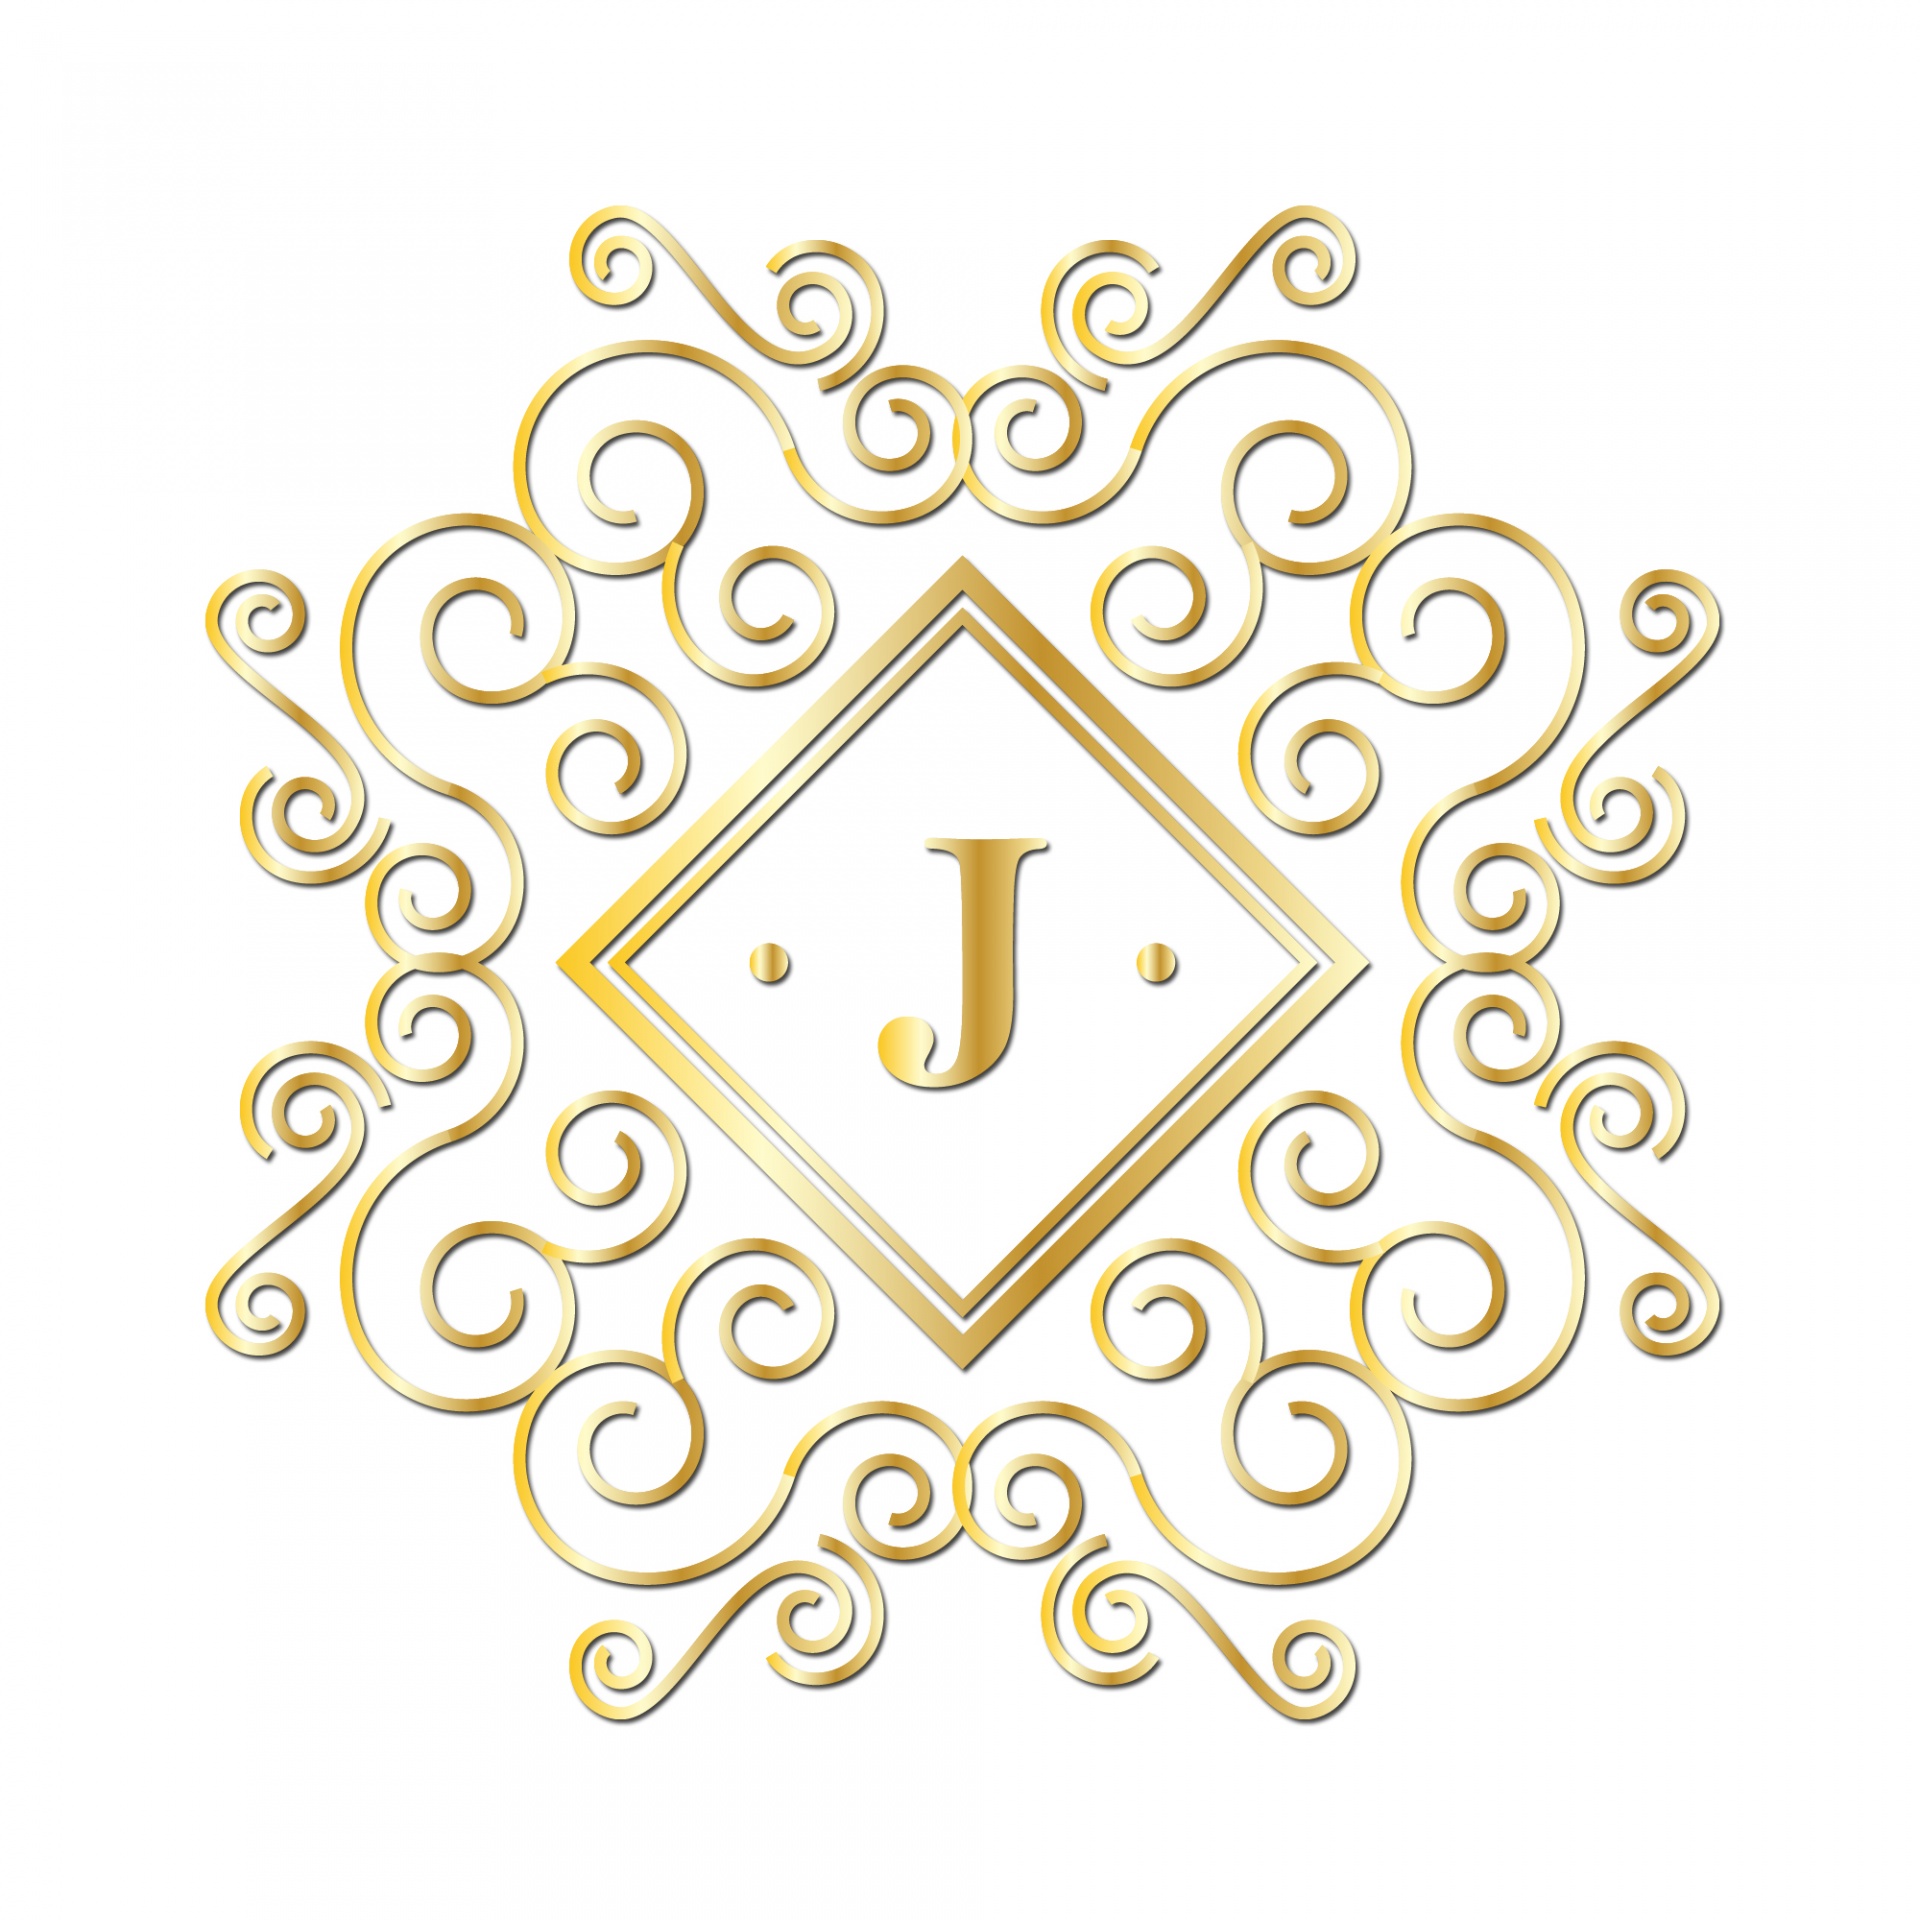 J Alphabet Gold Monogram Free Stock Photo - Public Domain Pictures